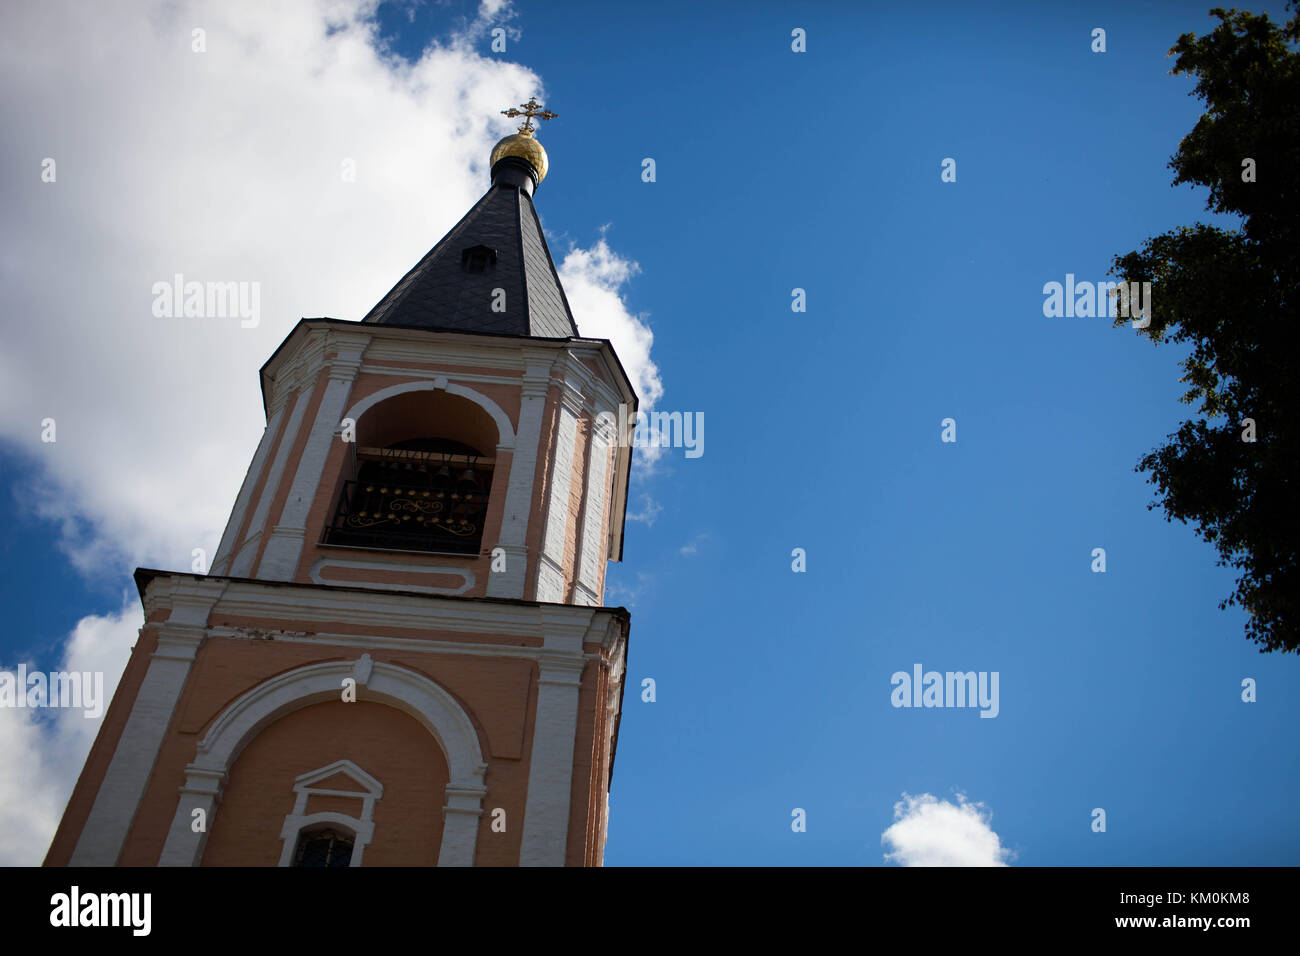 La chiesa ortodossa su sfondo cielo Foto Stock